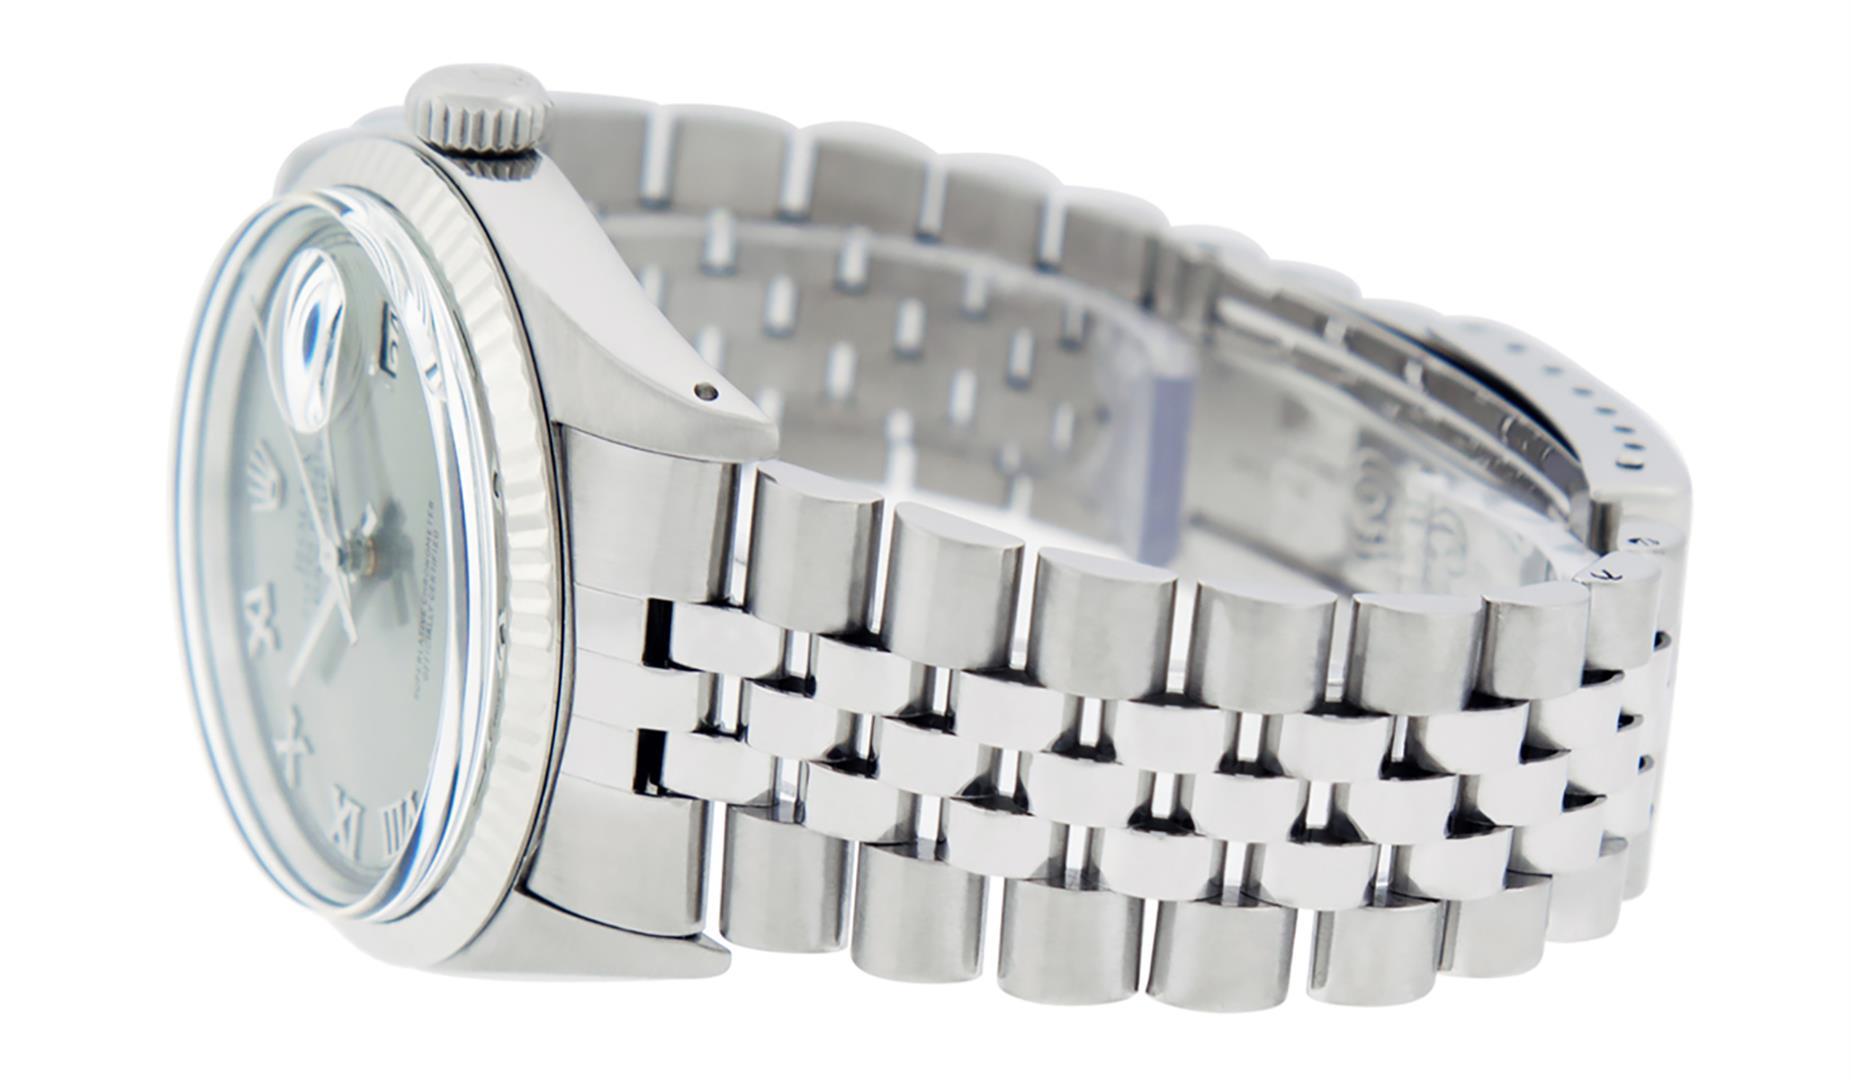 Rolex Mens Stainless Steel 36MM Slate Grey Roman Datejust Wristwatch